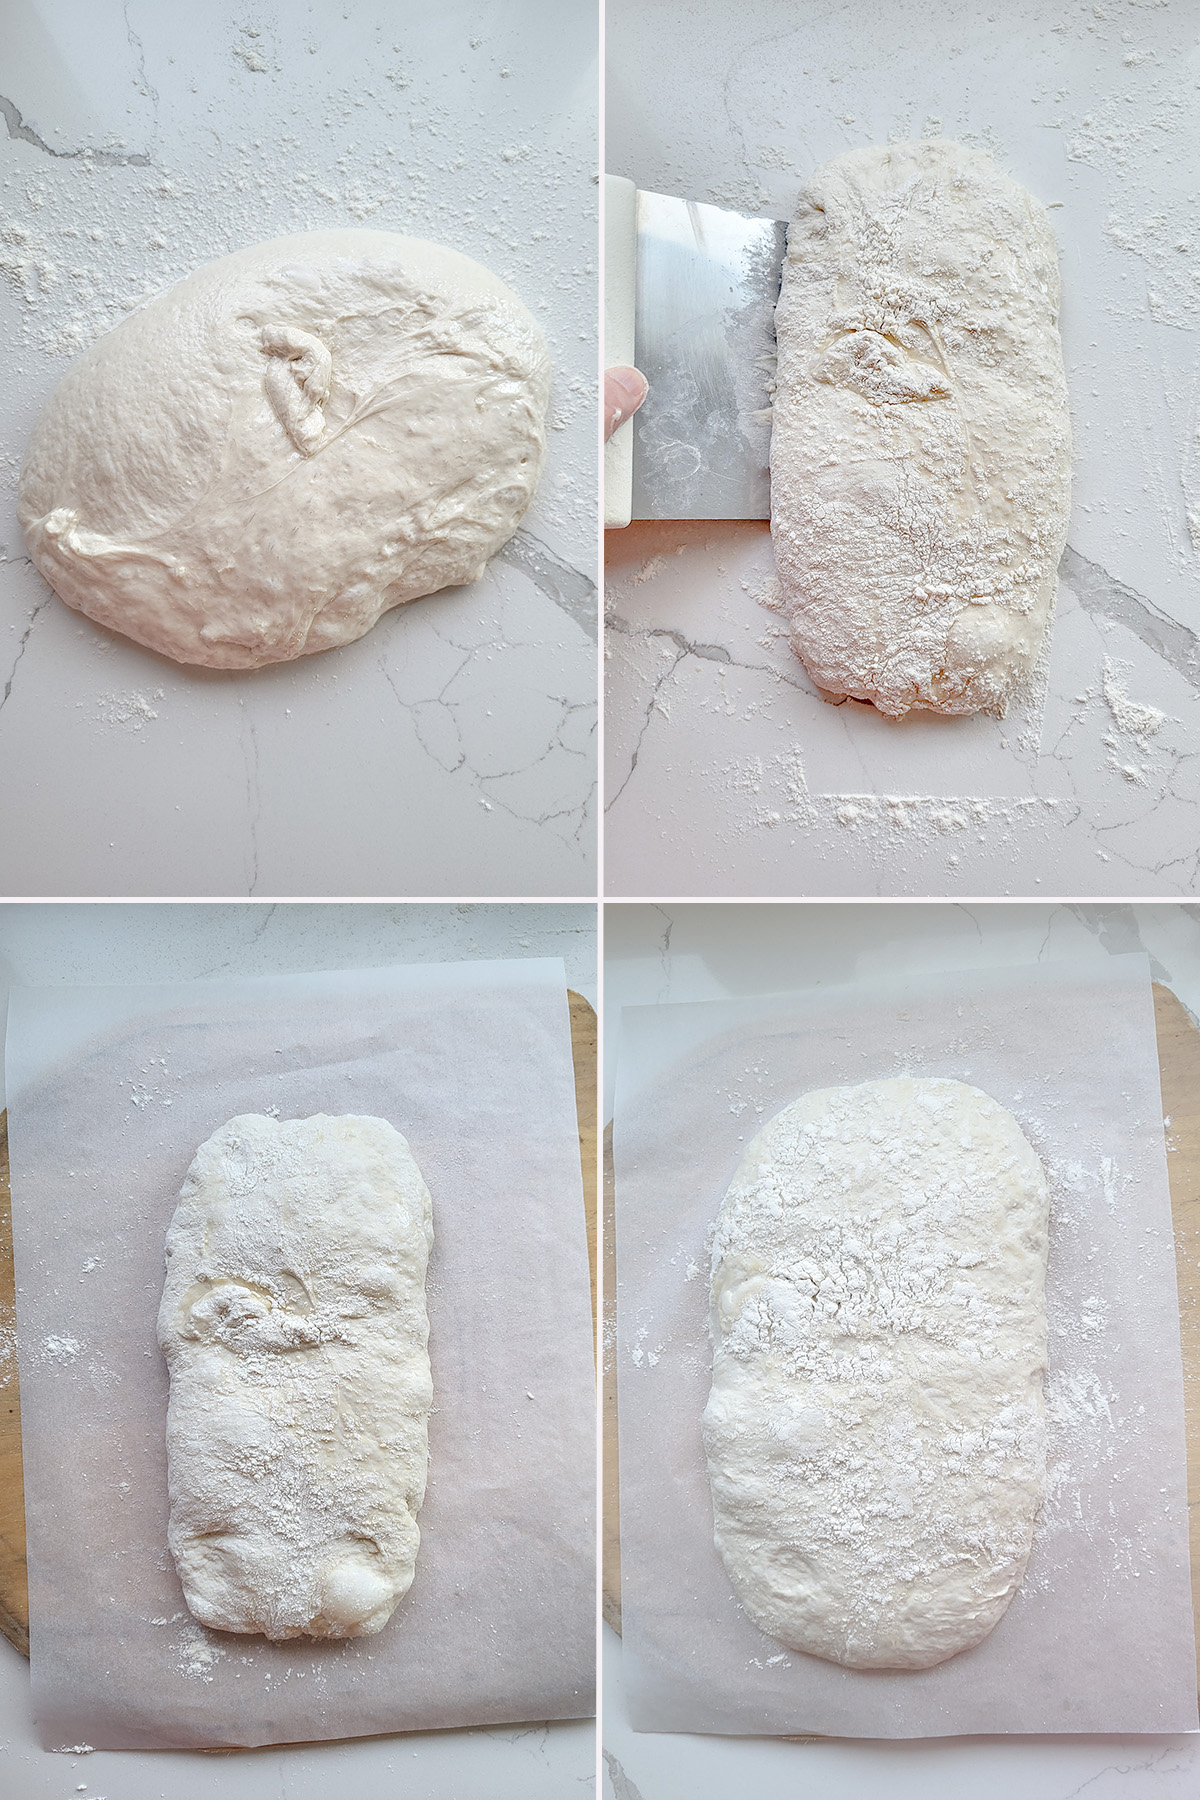 dough shaped into a rectangle.